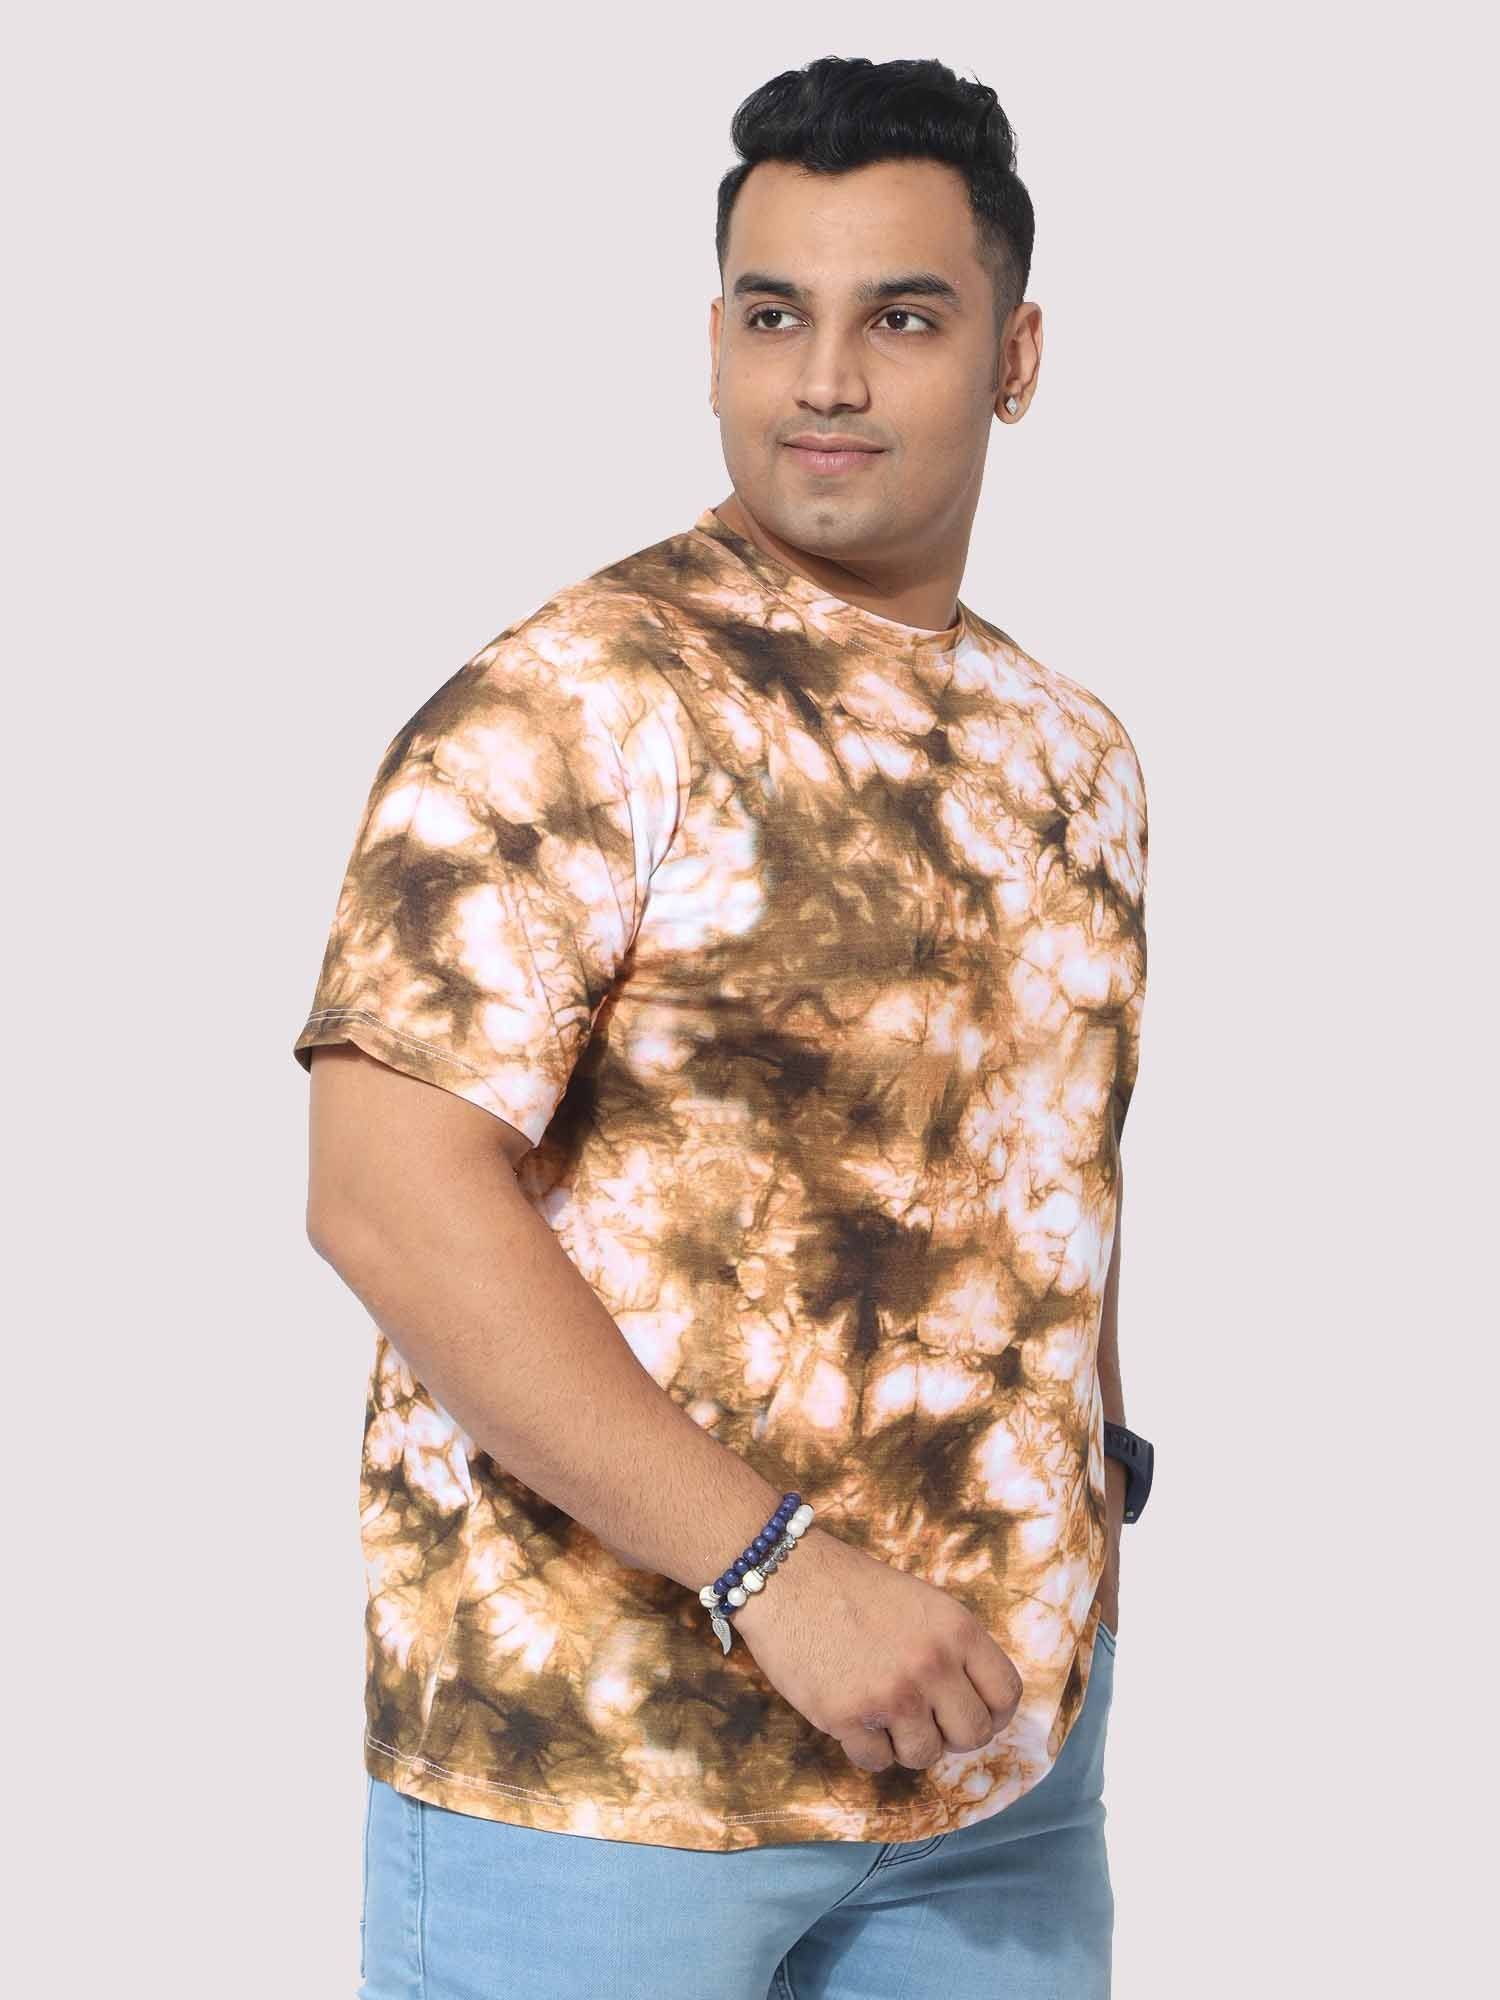 Men Plus Size Mustard Tie Dye Texture Digital Printed Round Neck T-Shirt - Guniaa Fashions